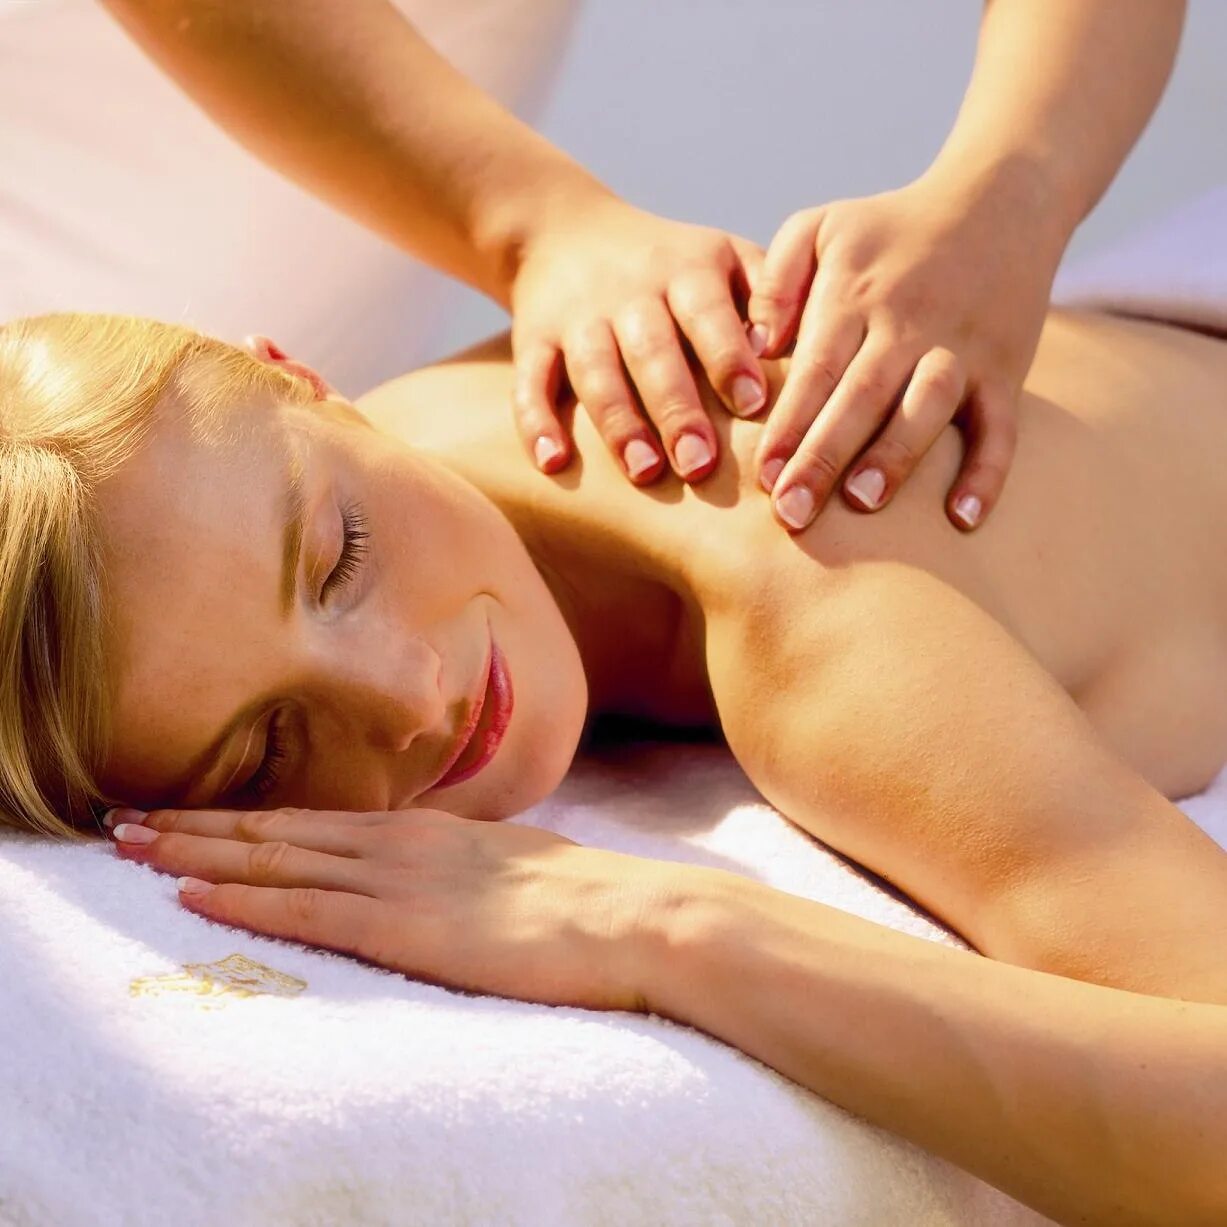 Massage two. Массаж для женщин. Классический массаж тела. Женская спина массаж. Массаж красиво.